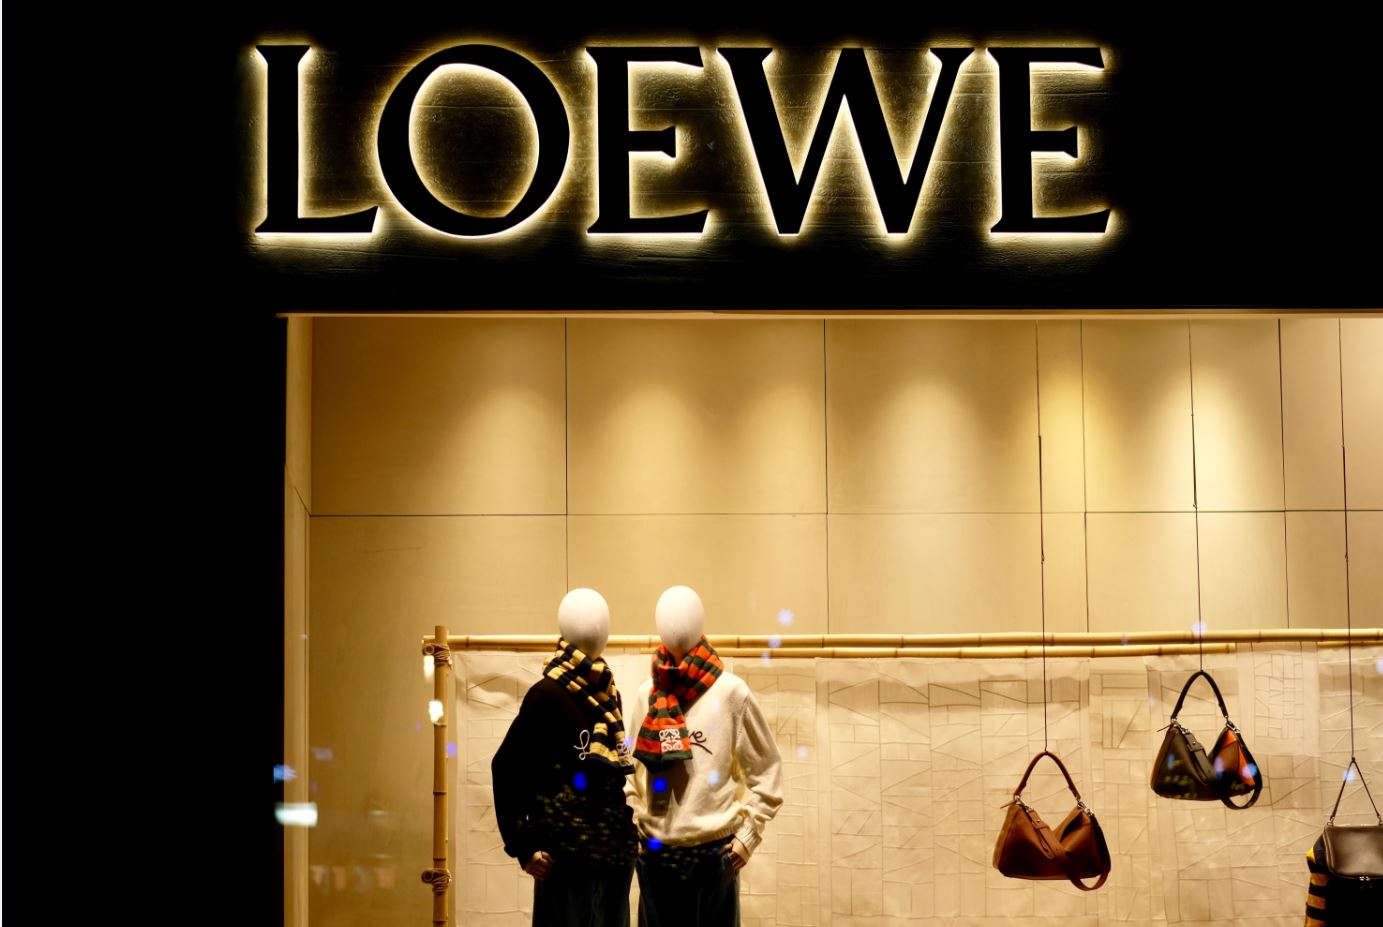 loewe luxury brand